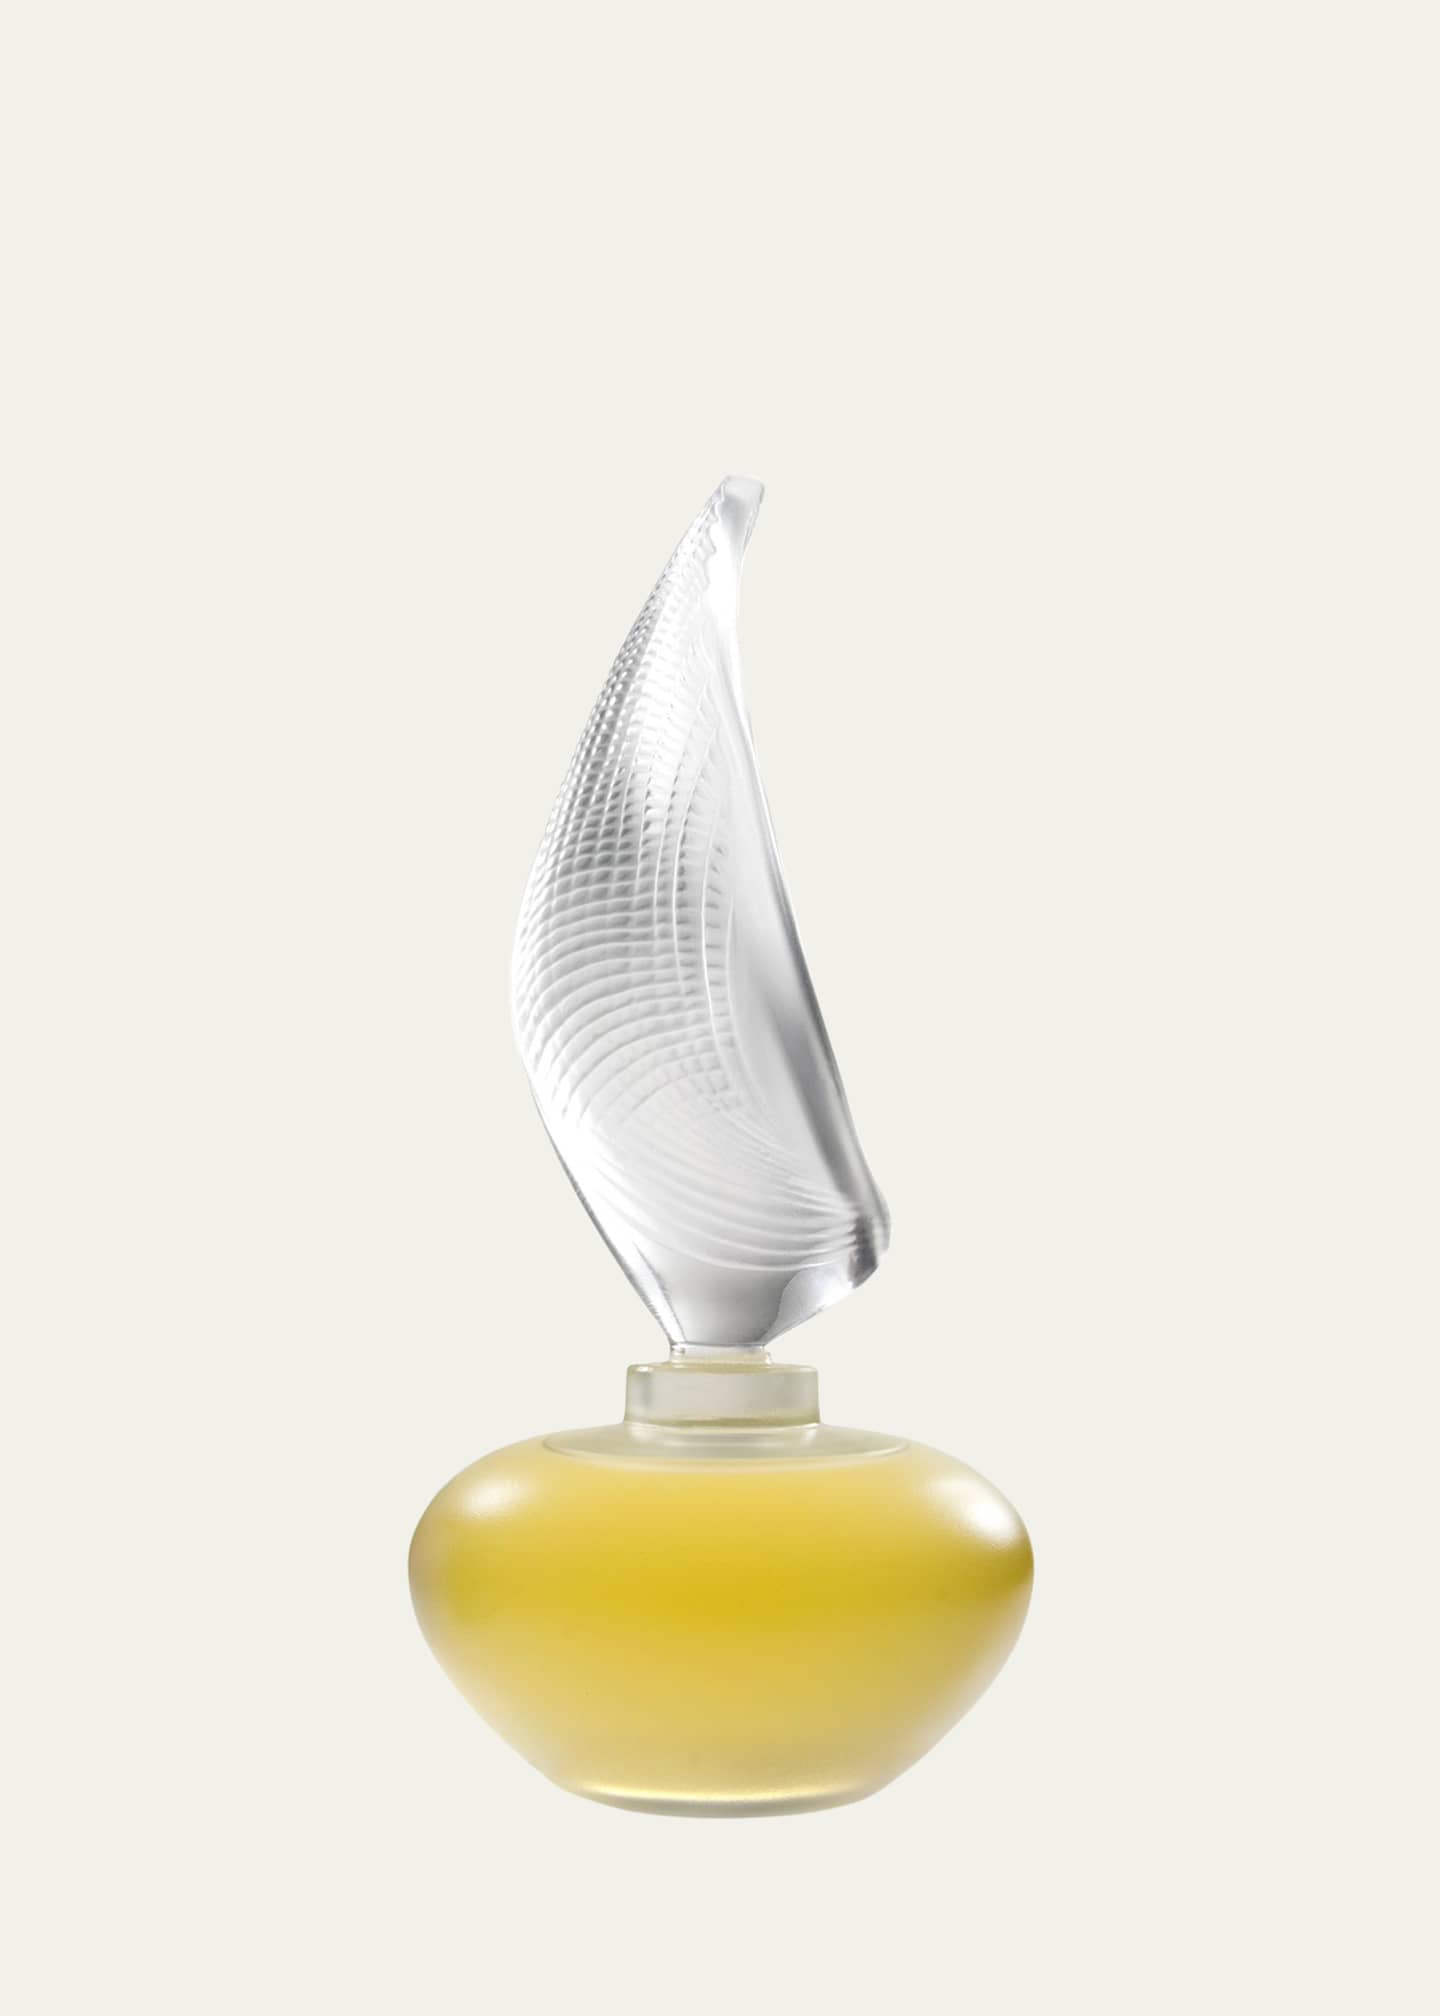 Shalini Parfum Shalini Parfum presented in a Lalique Crystal flacon, 2.2 oz. / 65 mL